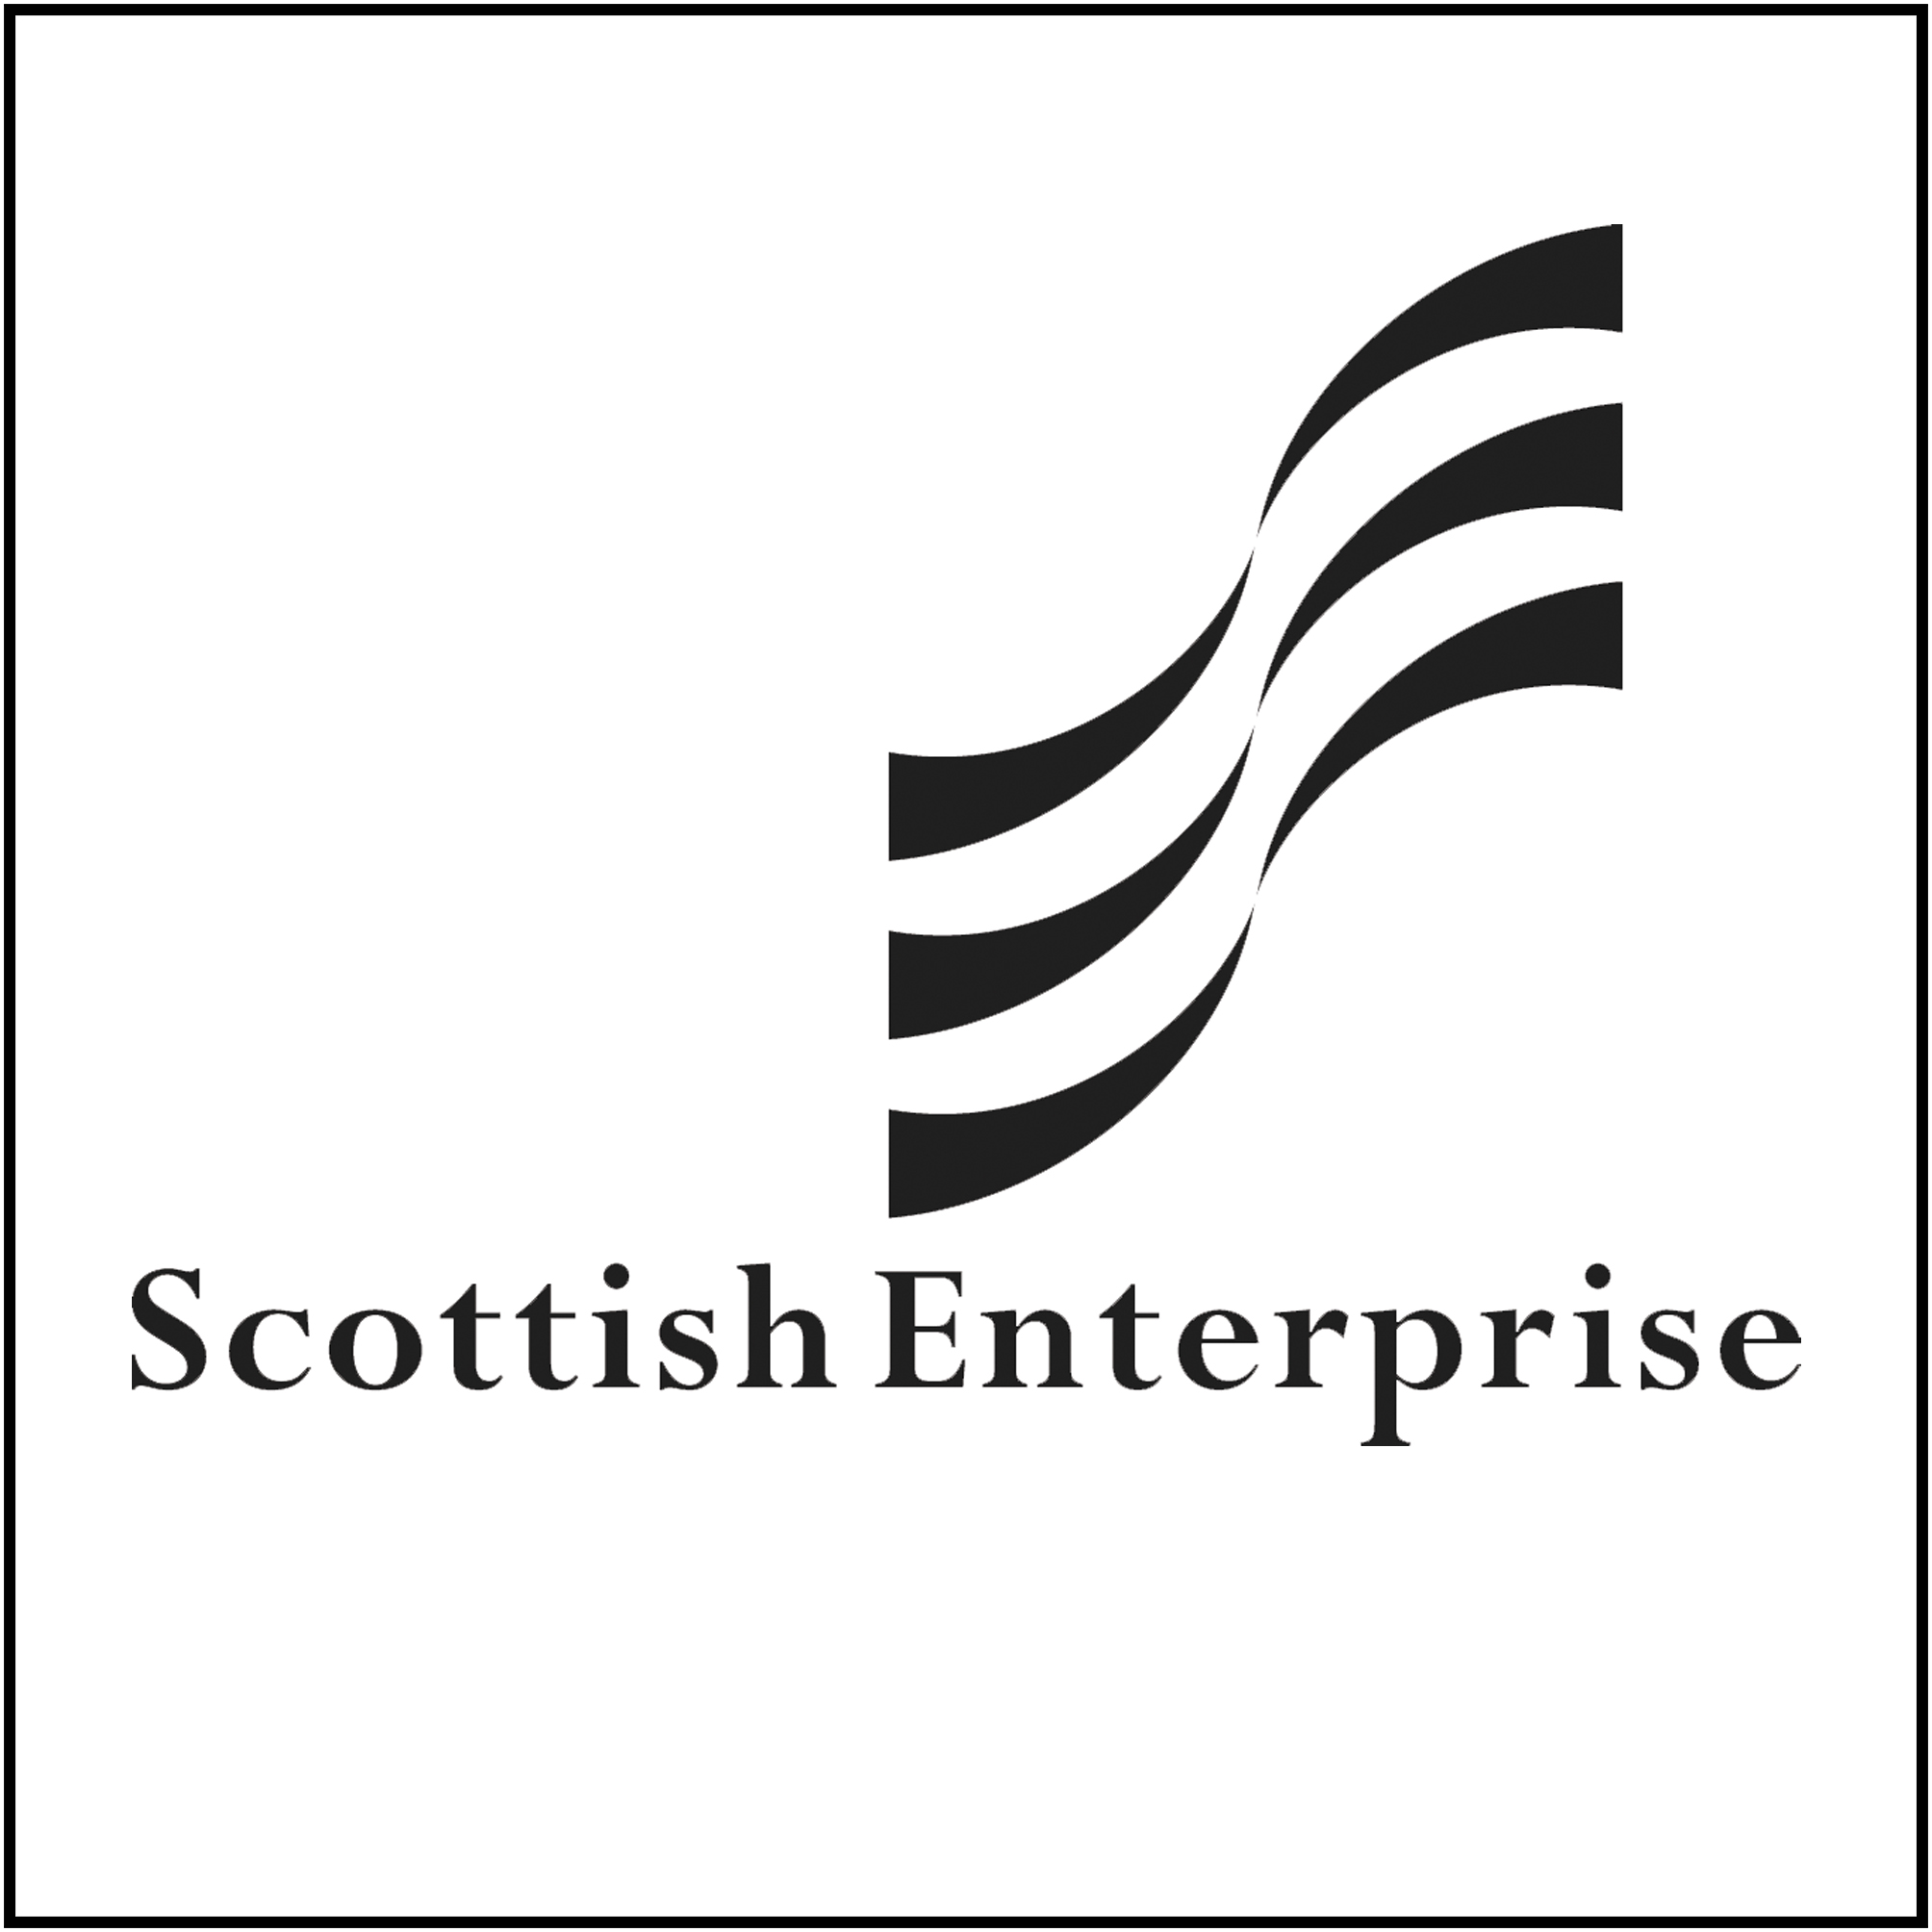 Scottish Enterprise logo